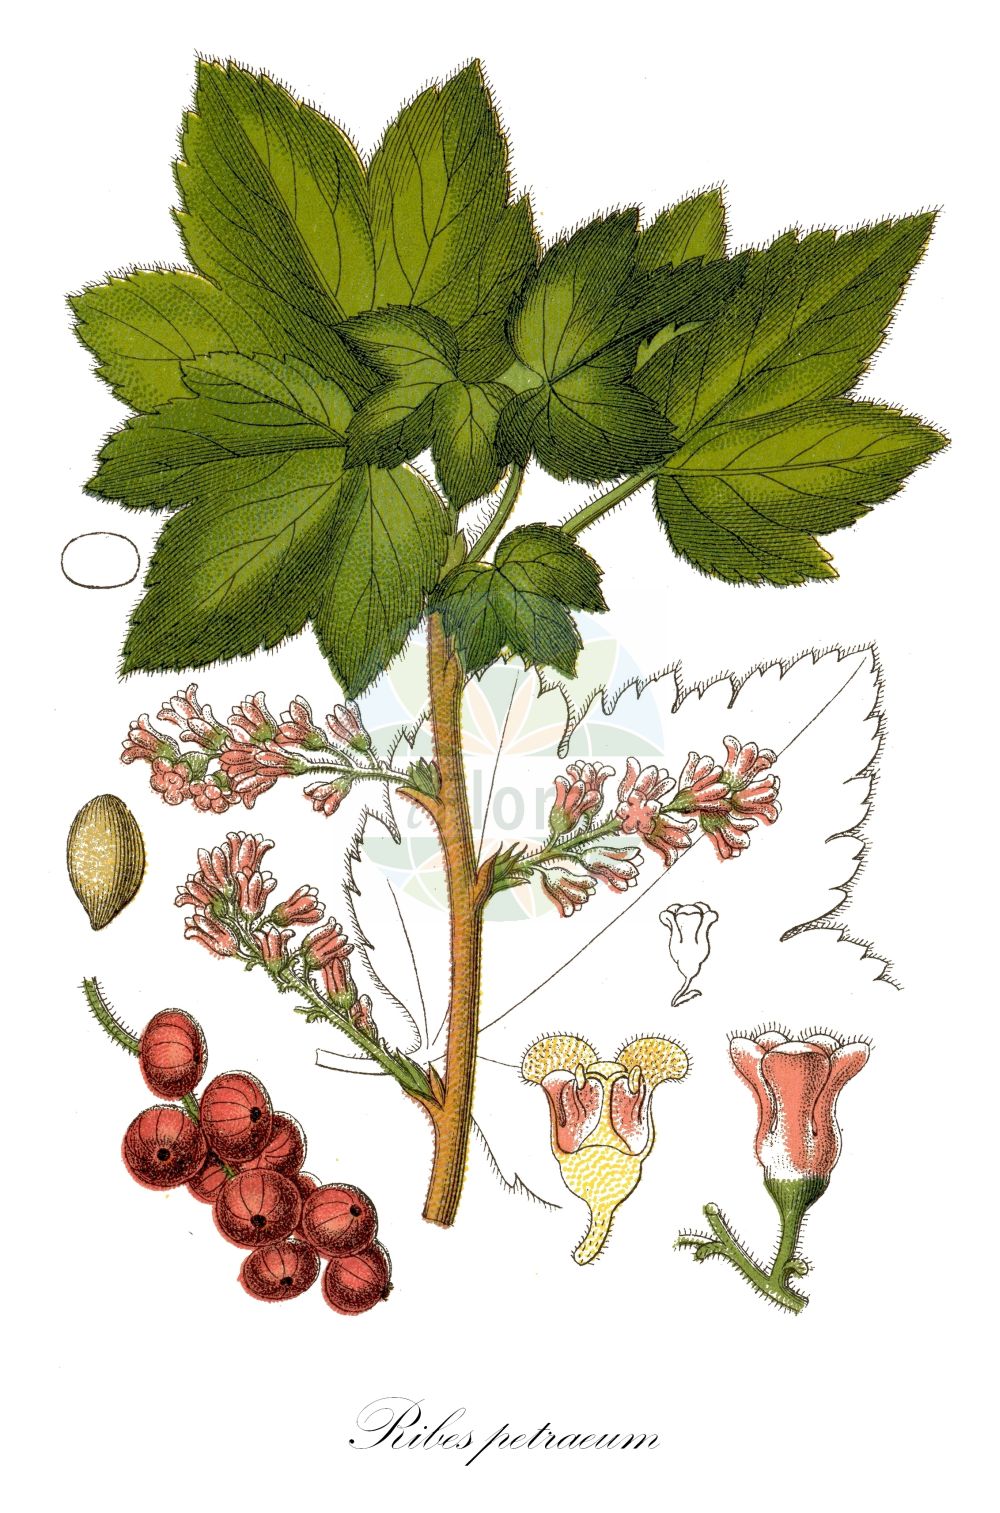 Historische Abbildung von Ribes petraeum (Felsen-Johannisbeere - Currant). ---- Historical Drawing of Ribes petraeum (Felsen-Johannisbeere - Currant).(Ribes petraeum,Felsen-Johannisbeere,Currant,Ribes carpaticum,Ribes petraeum,Felsen-Johannisbeere,Currant,Rock Red Currant,Ribes,Johannisbeere,Currant,Grossulariaceae,Stachelbeergewächse,Gooseberry family,Sturm (1796f))